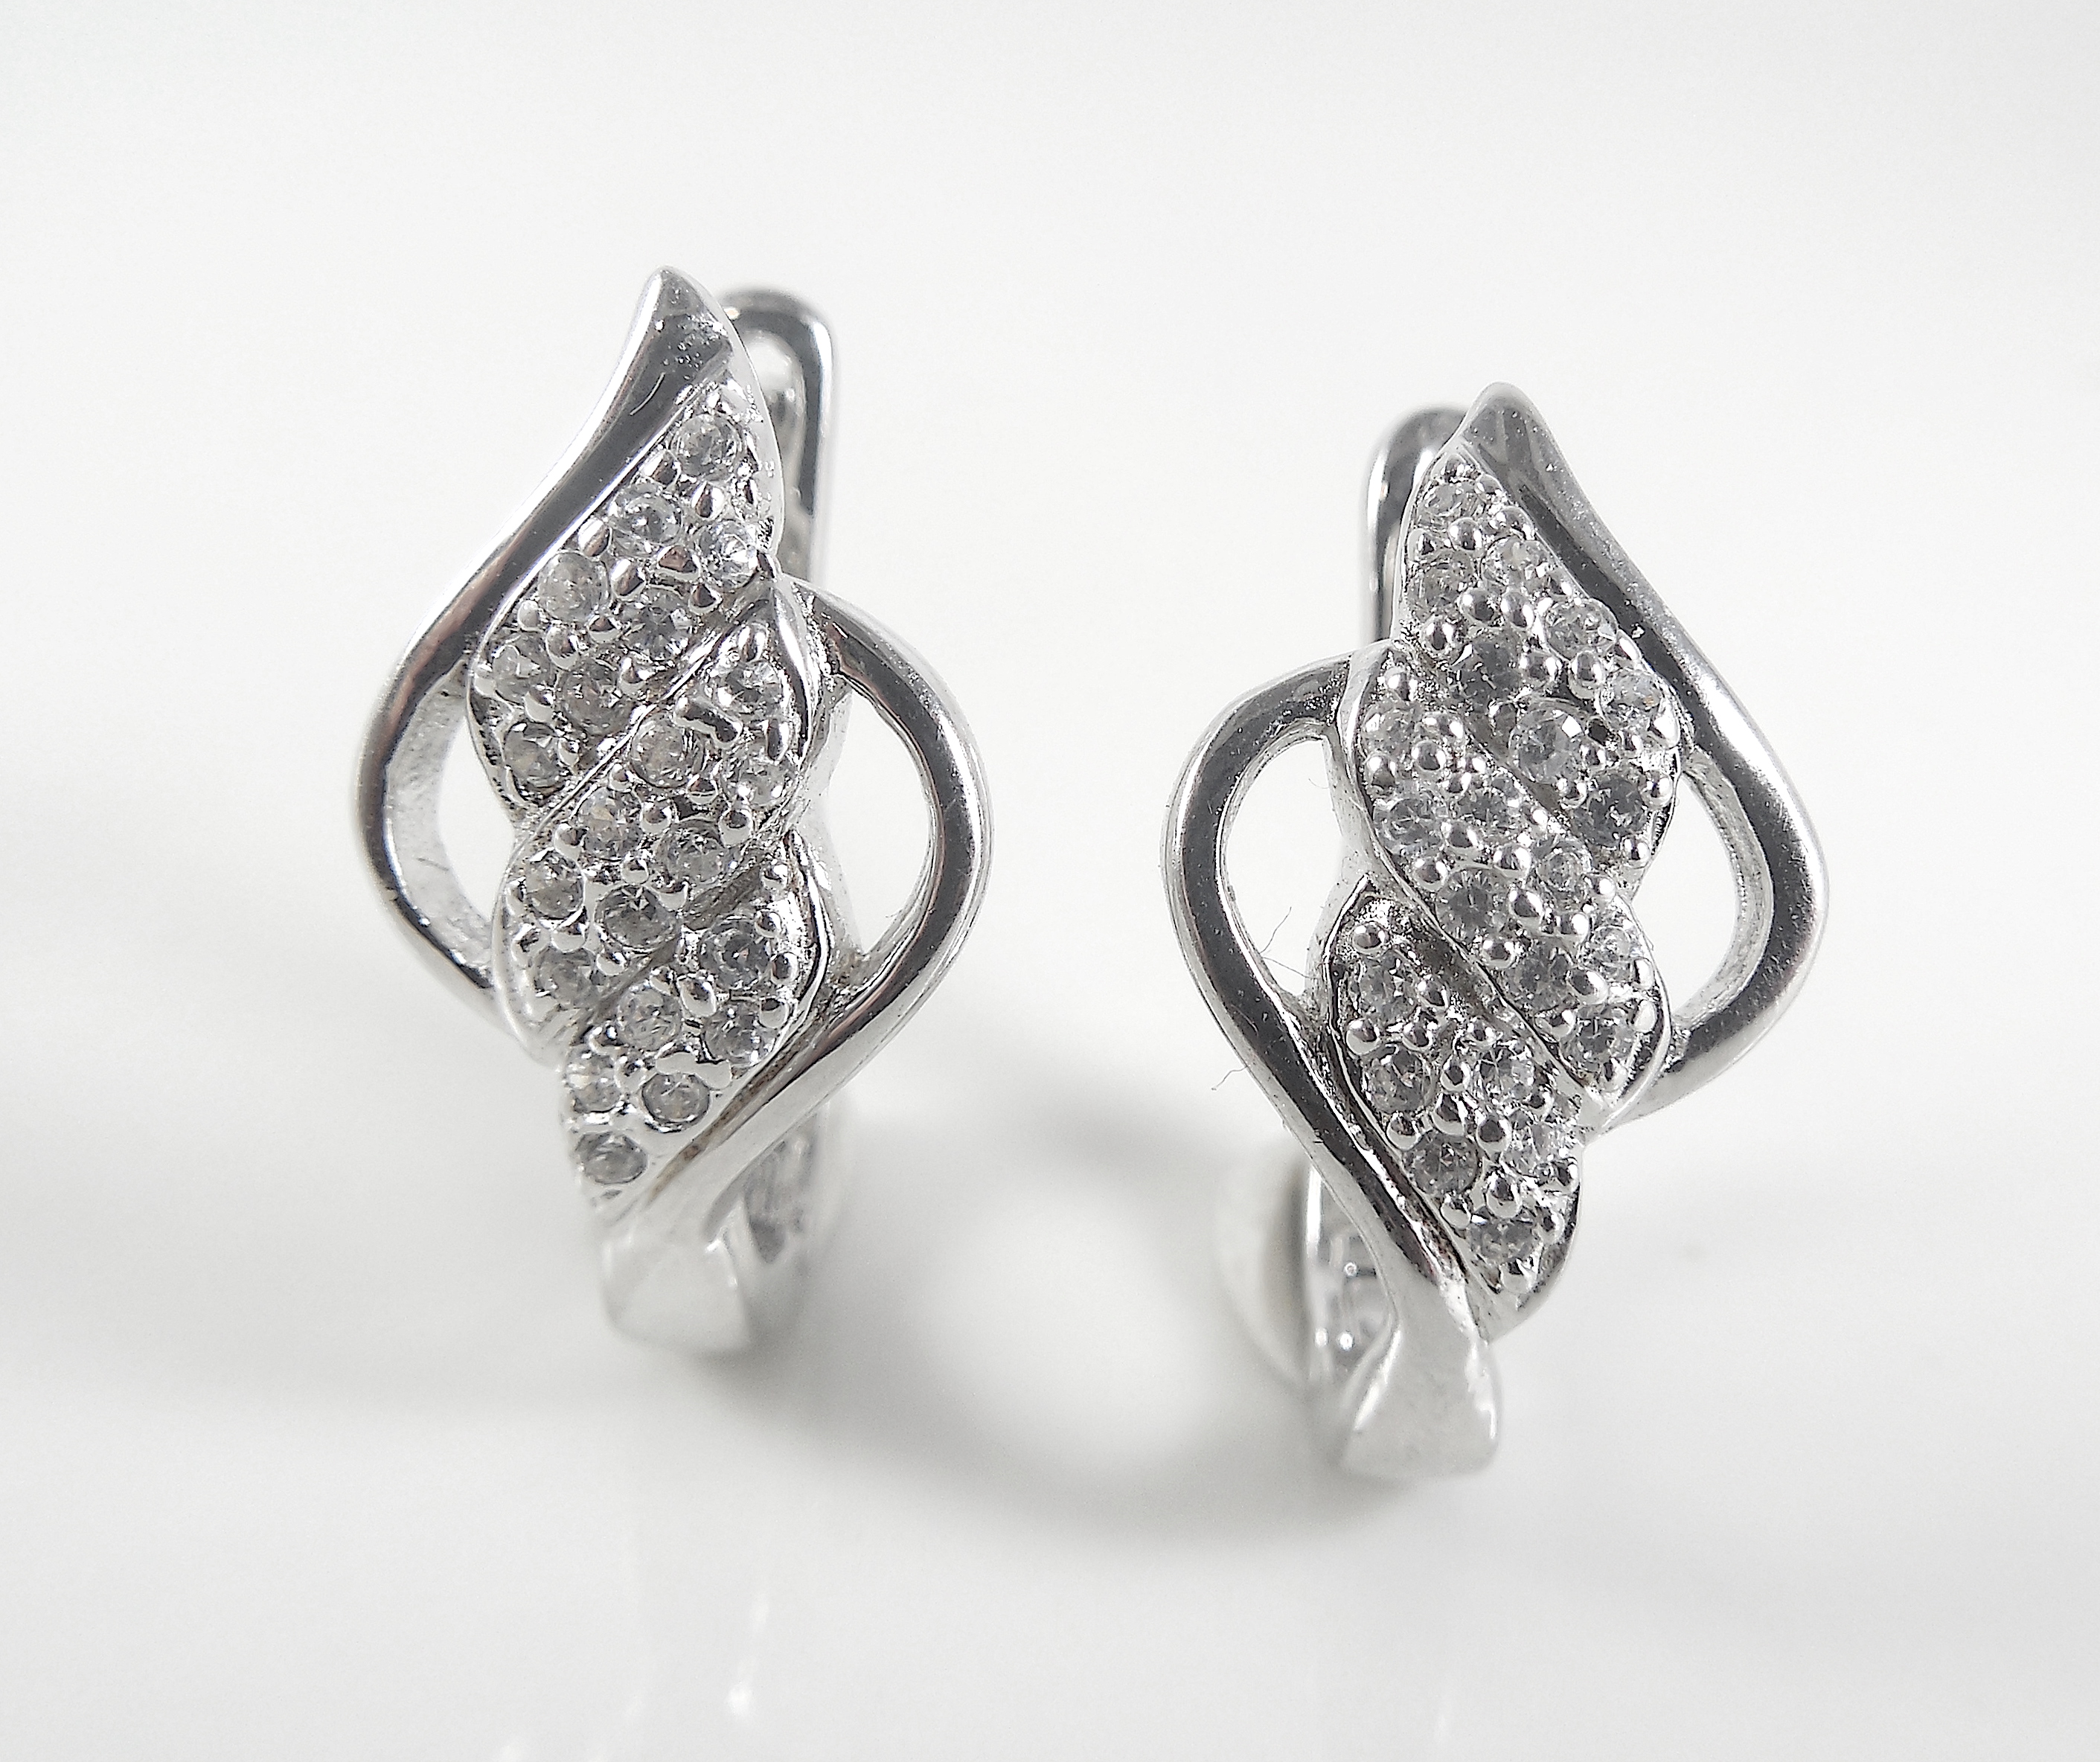 Silver earrings. - Image 3 of 4